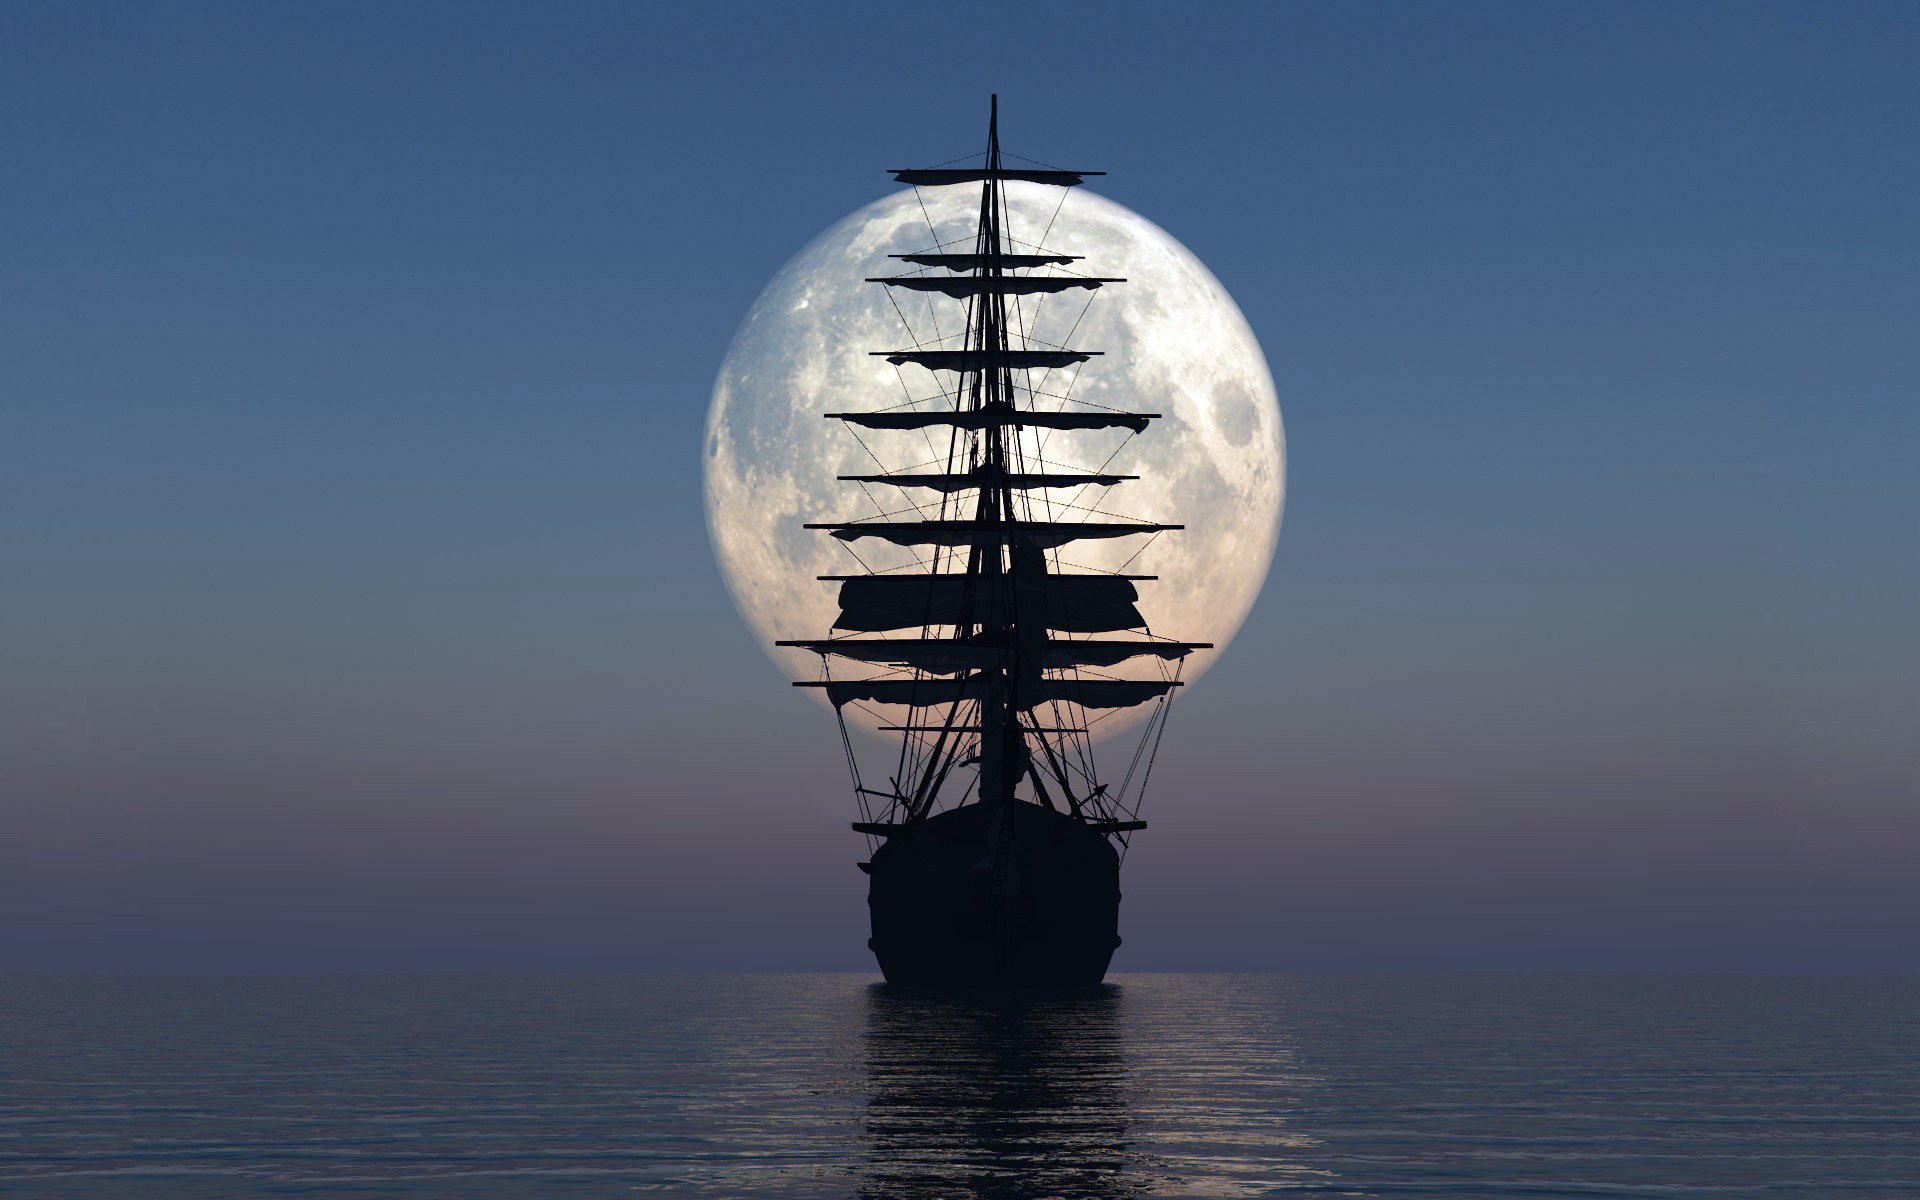 море паруса океан небо луна мачты корабль силуэт